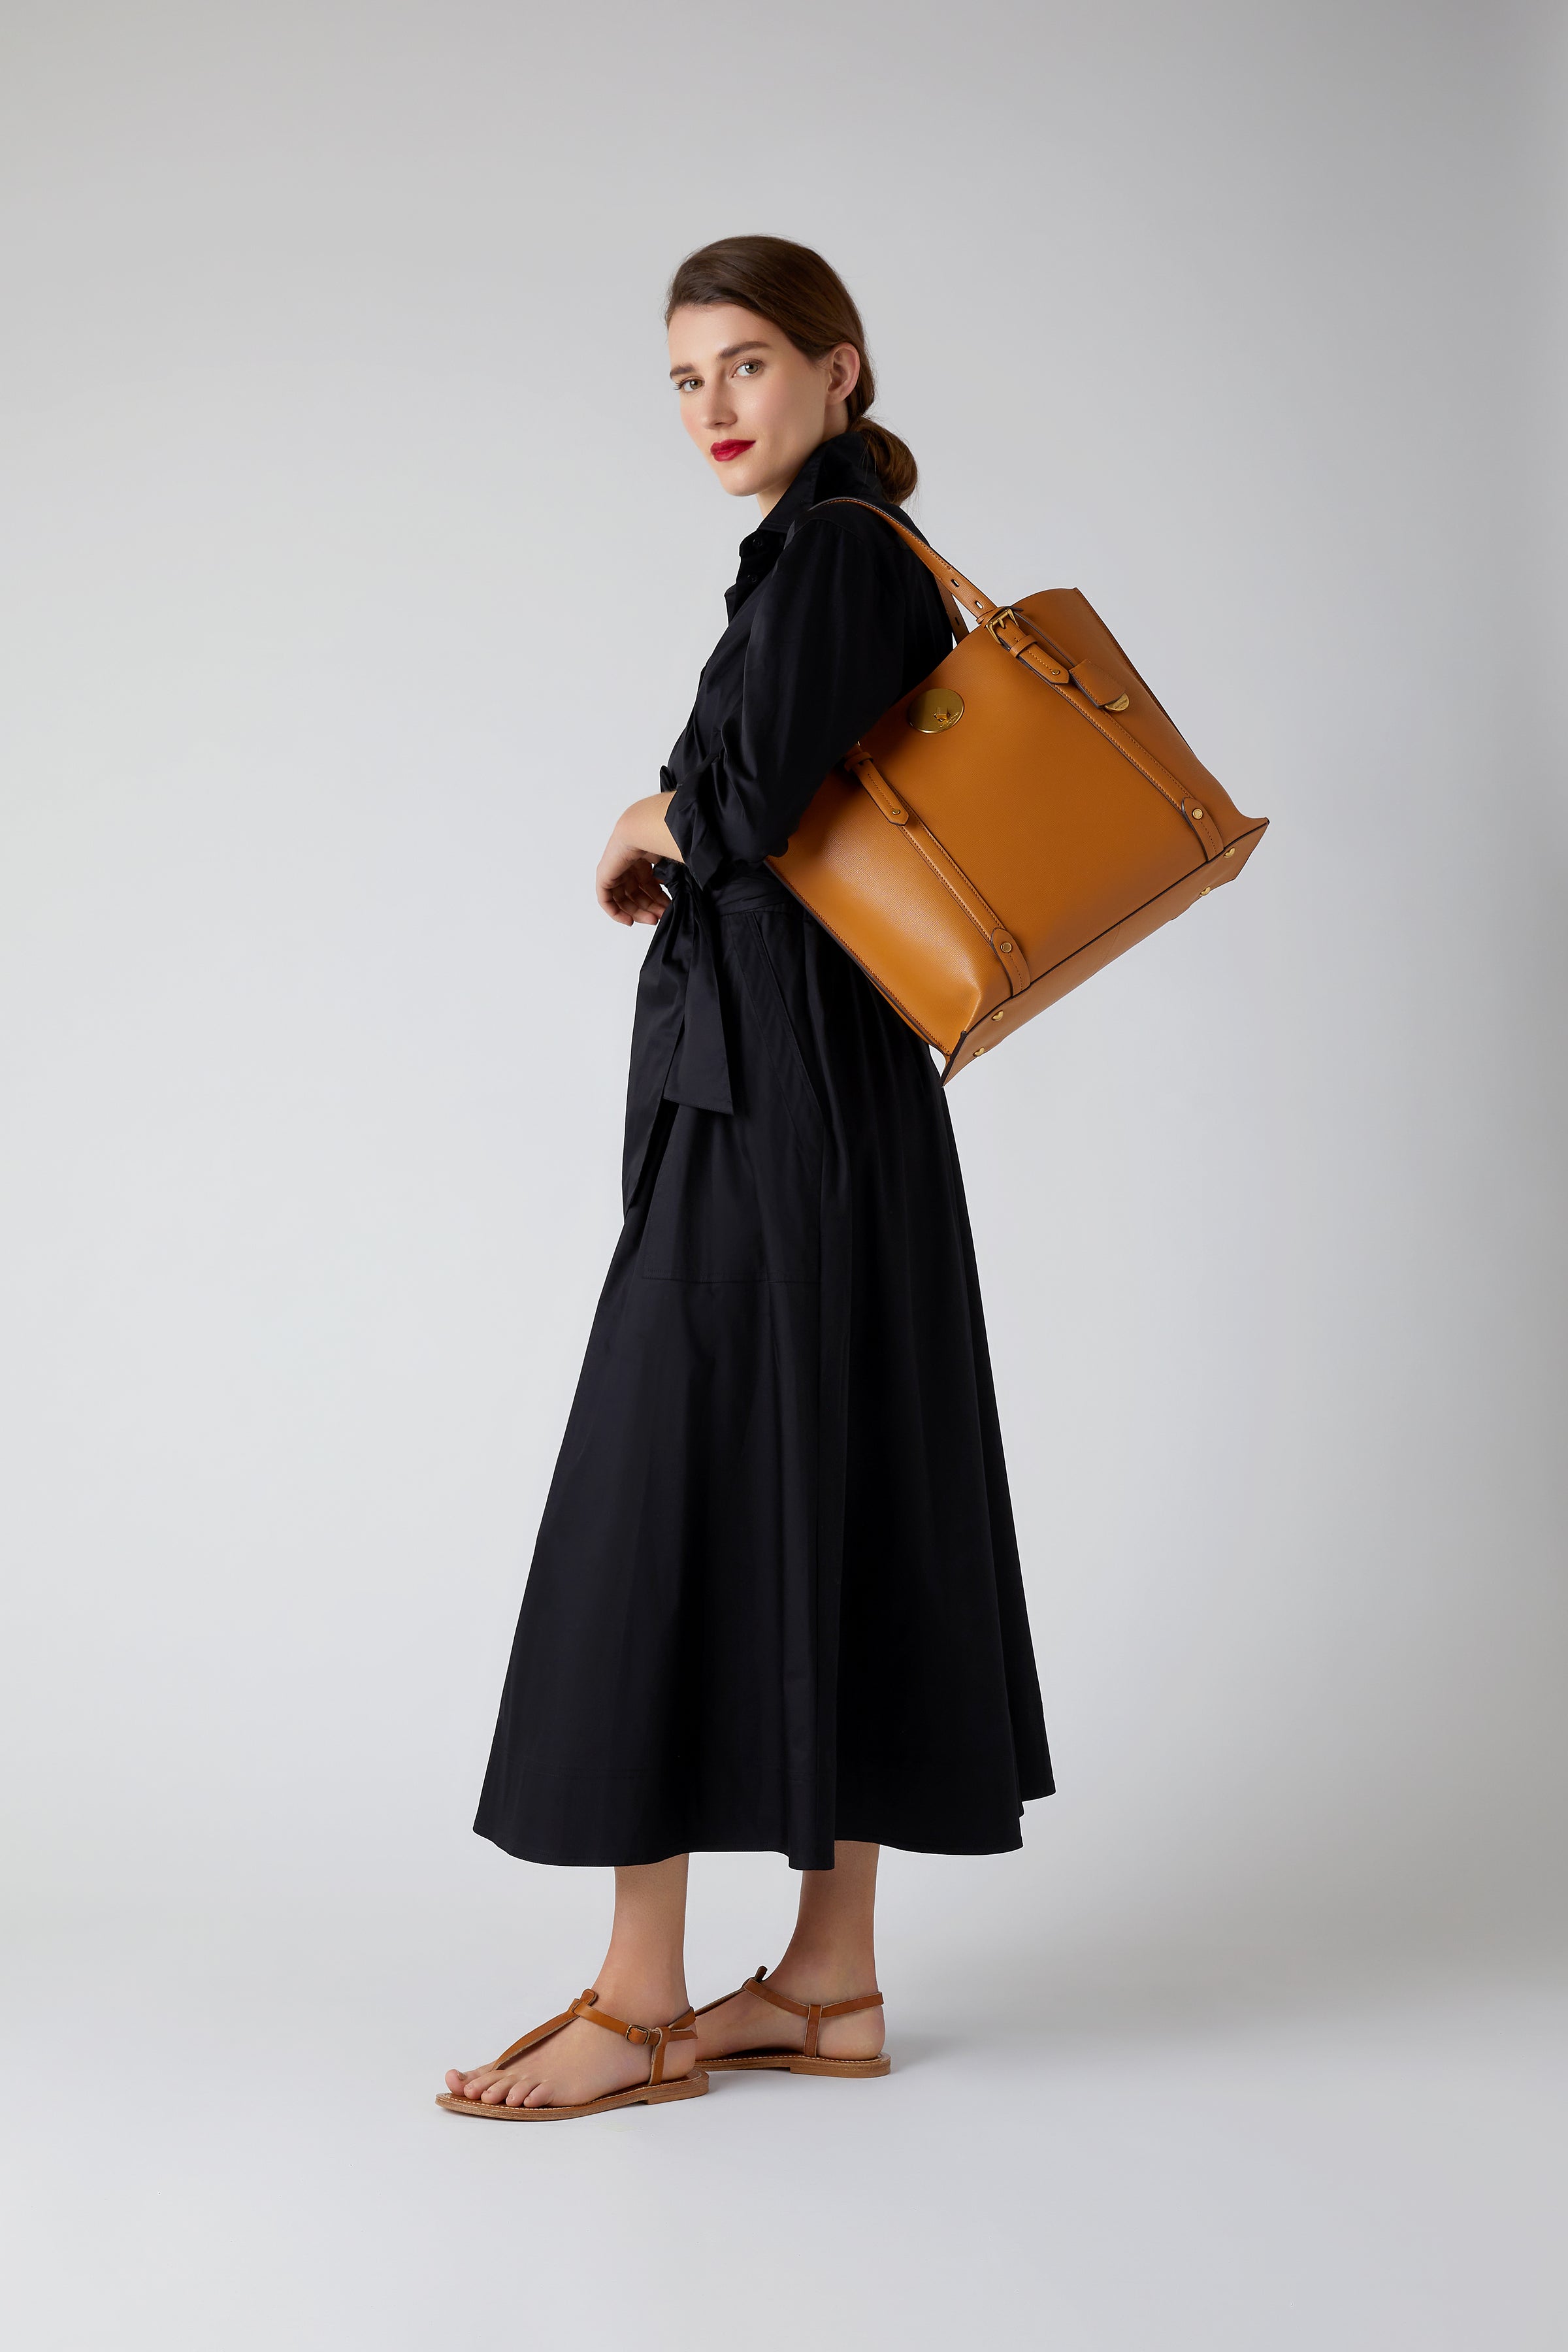 Dior - Jasper Conran London Aubrey Leather Winged sushion Tote Bag